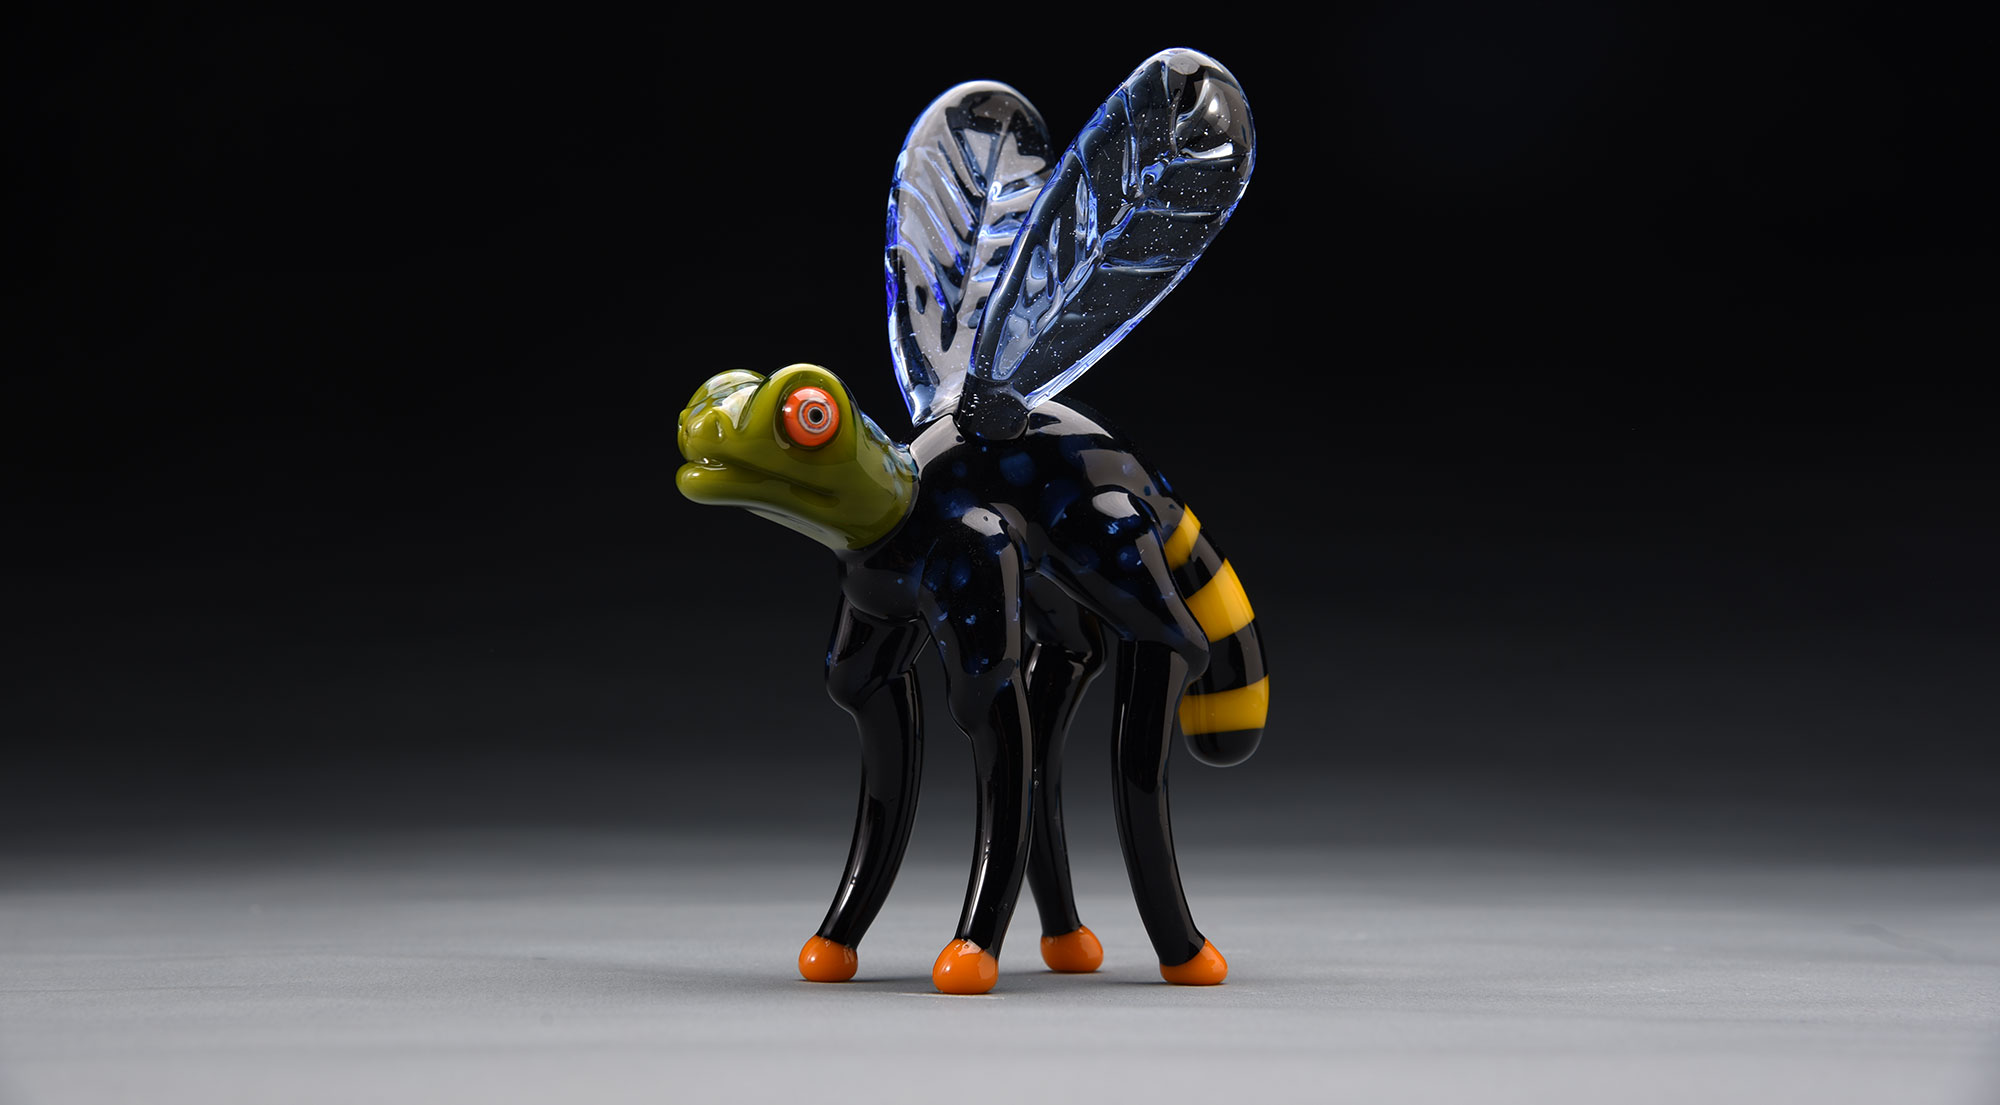 art doc dragonfly